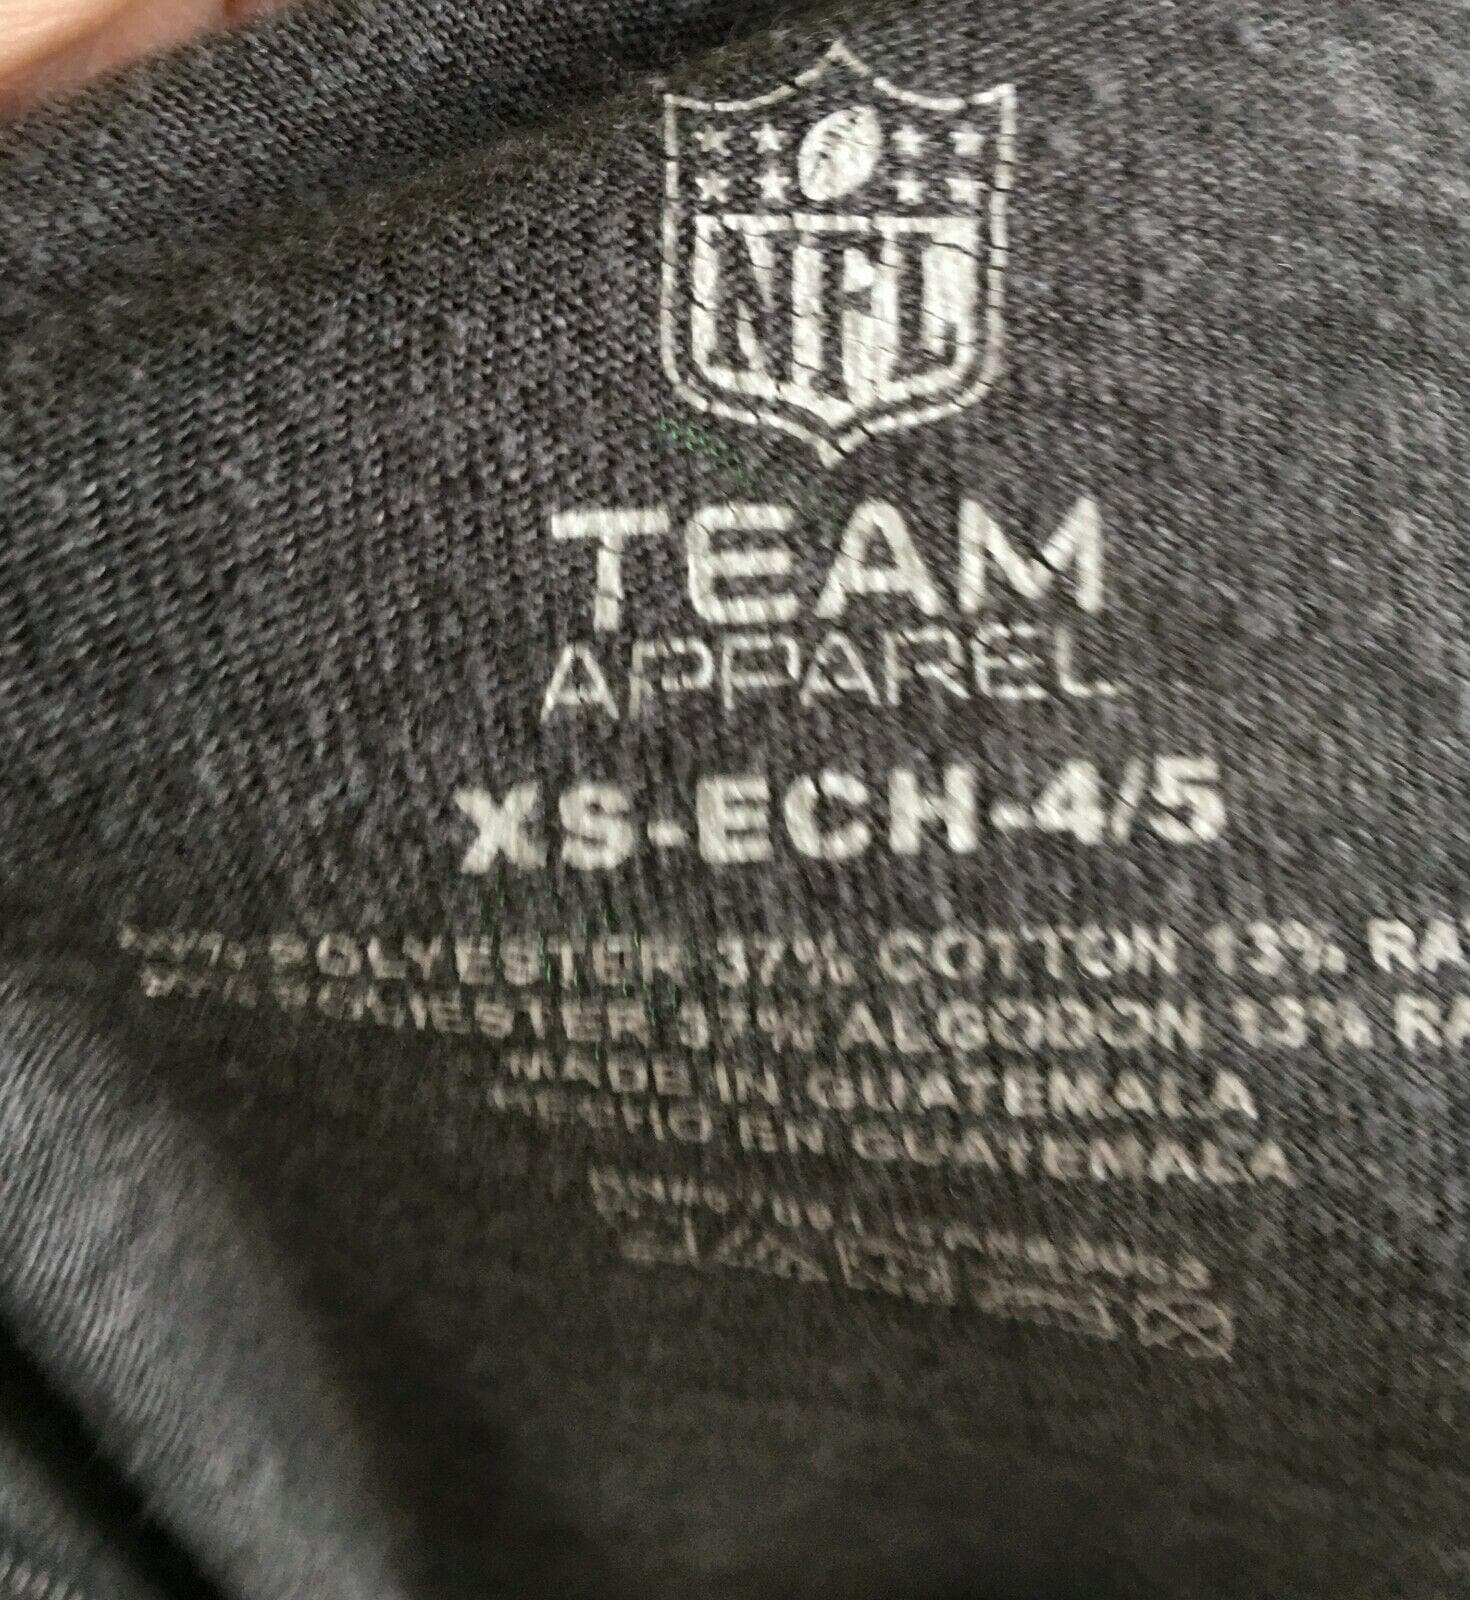 NFL Baltimore Ravens Grey T-Shirt Girls' X-Small 4-5